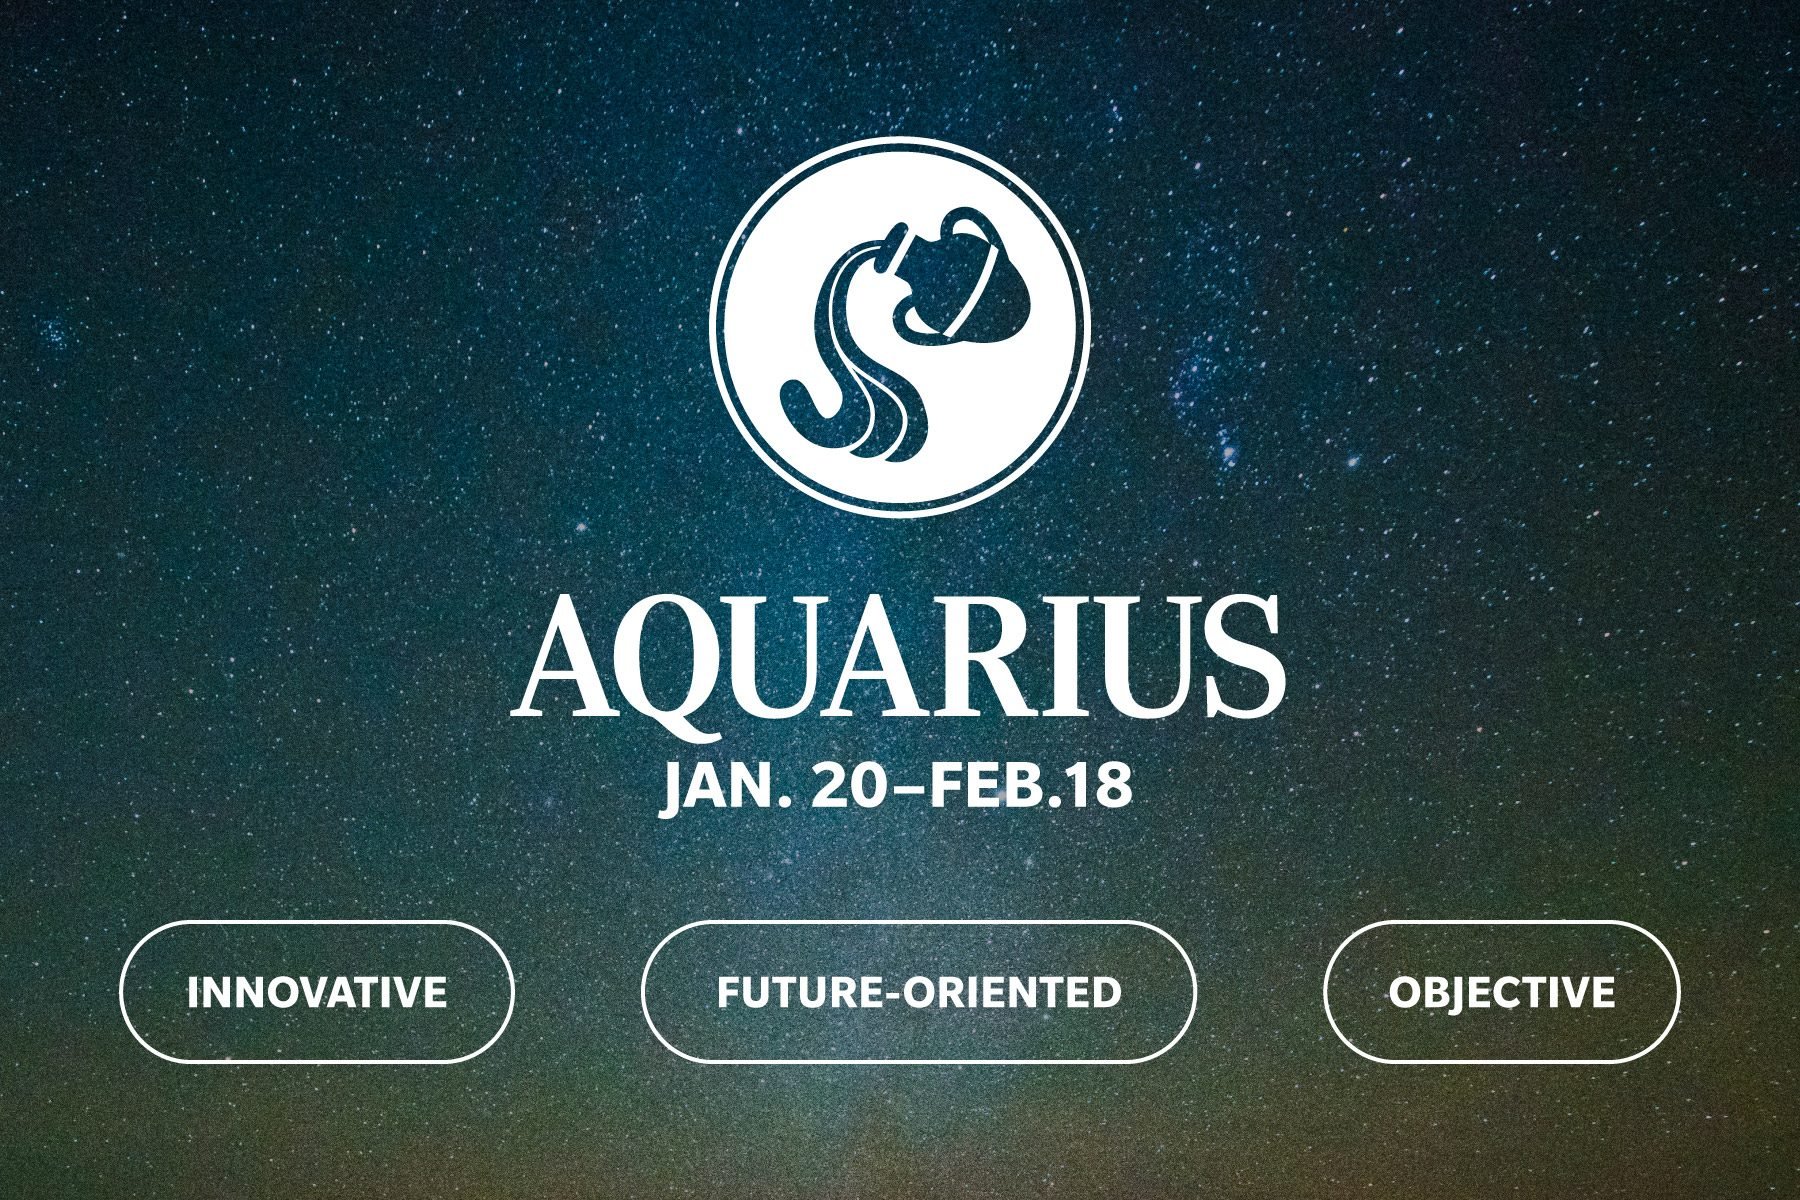 Zodiac sign qualities on galaxy background Aquarius